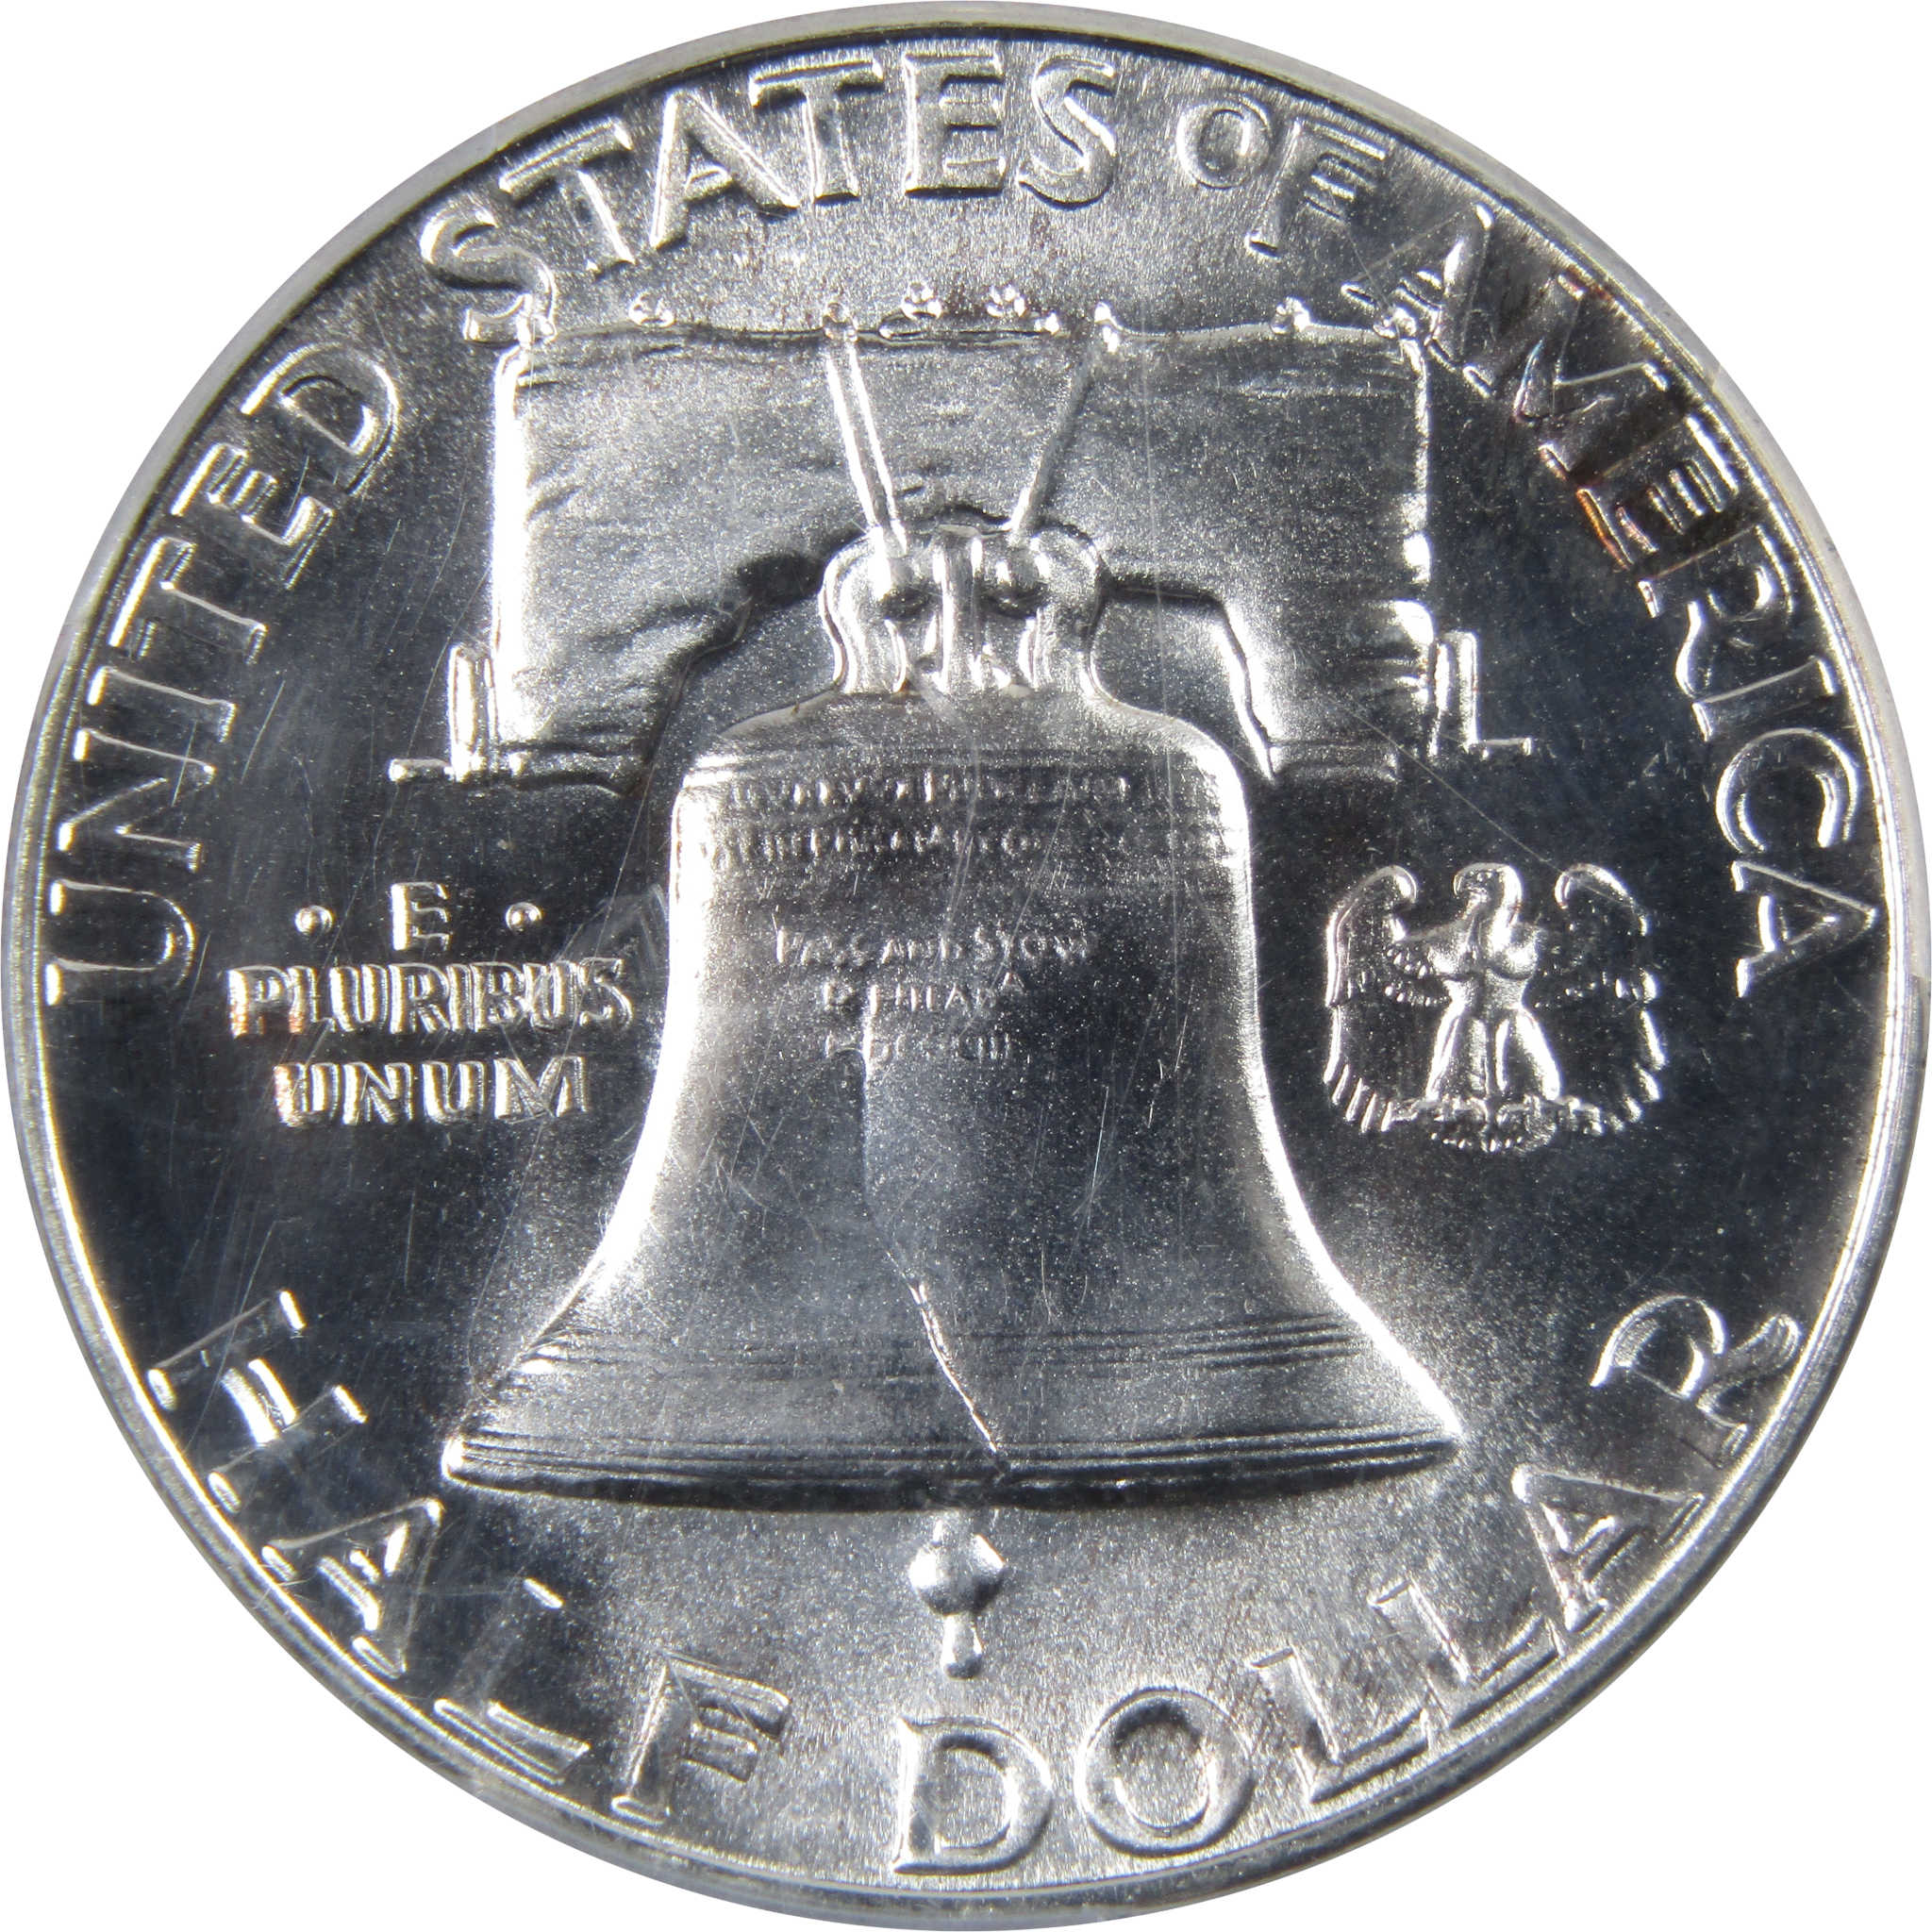 1950 Franklin Half Dollar PR 66 PCGS 90% Silver 50c SKU:I7239